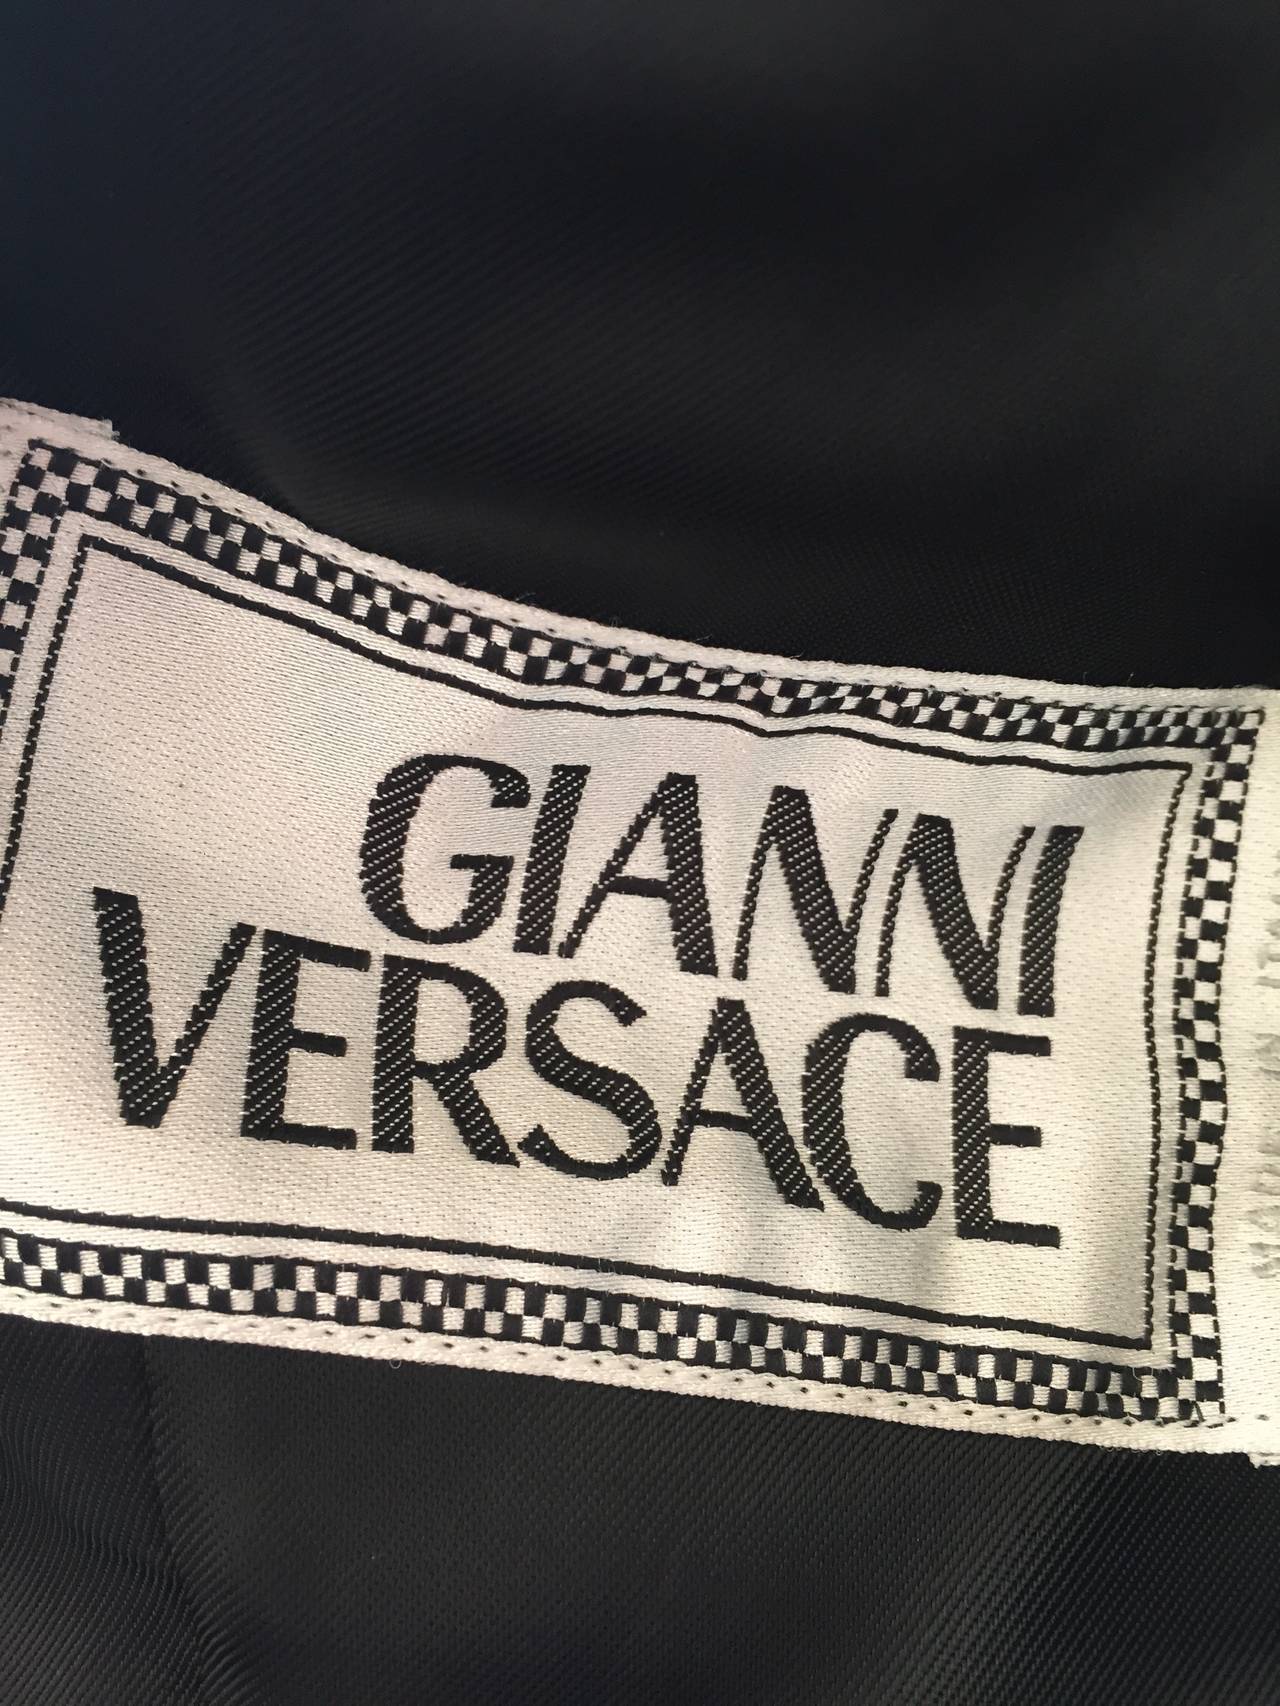 Gianni Versace Iconic 1992 Leather Vest 4